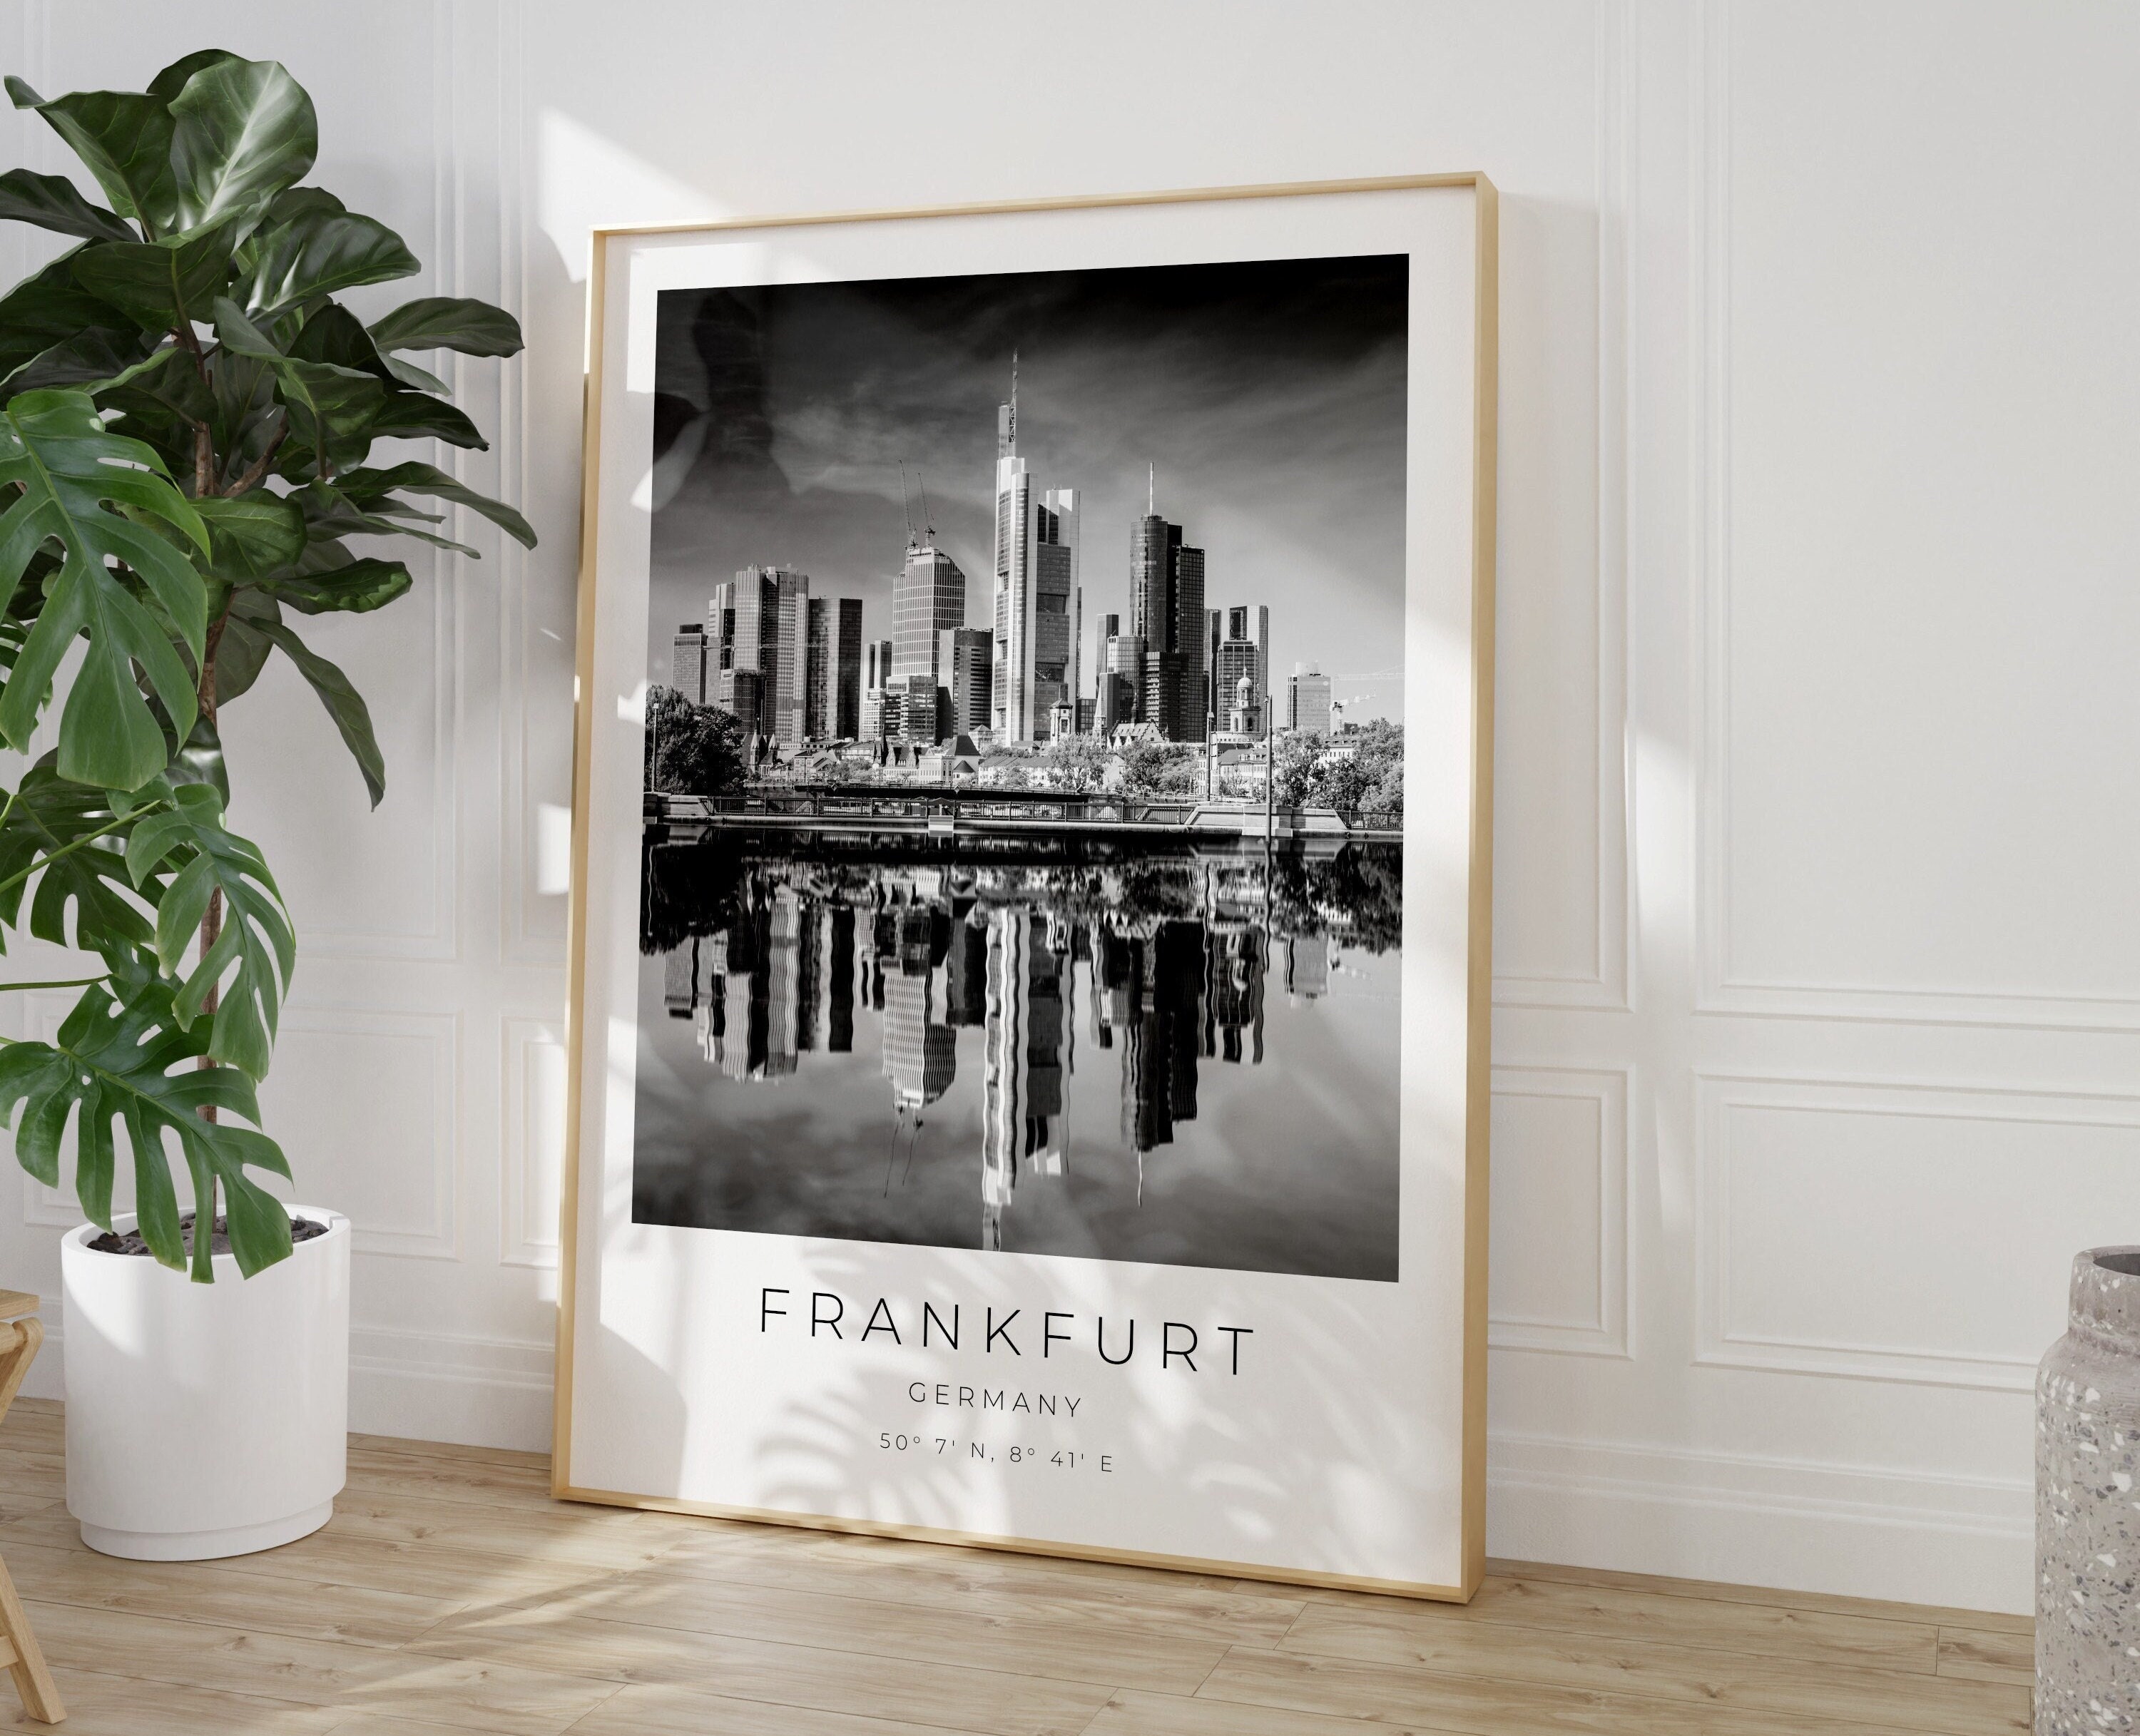 Frankfurt poster